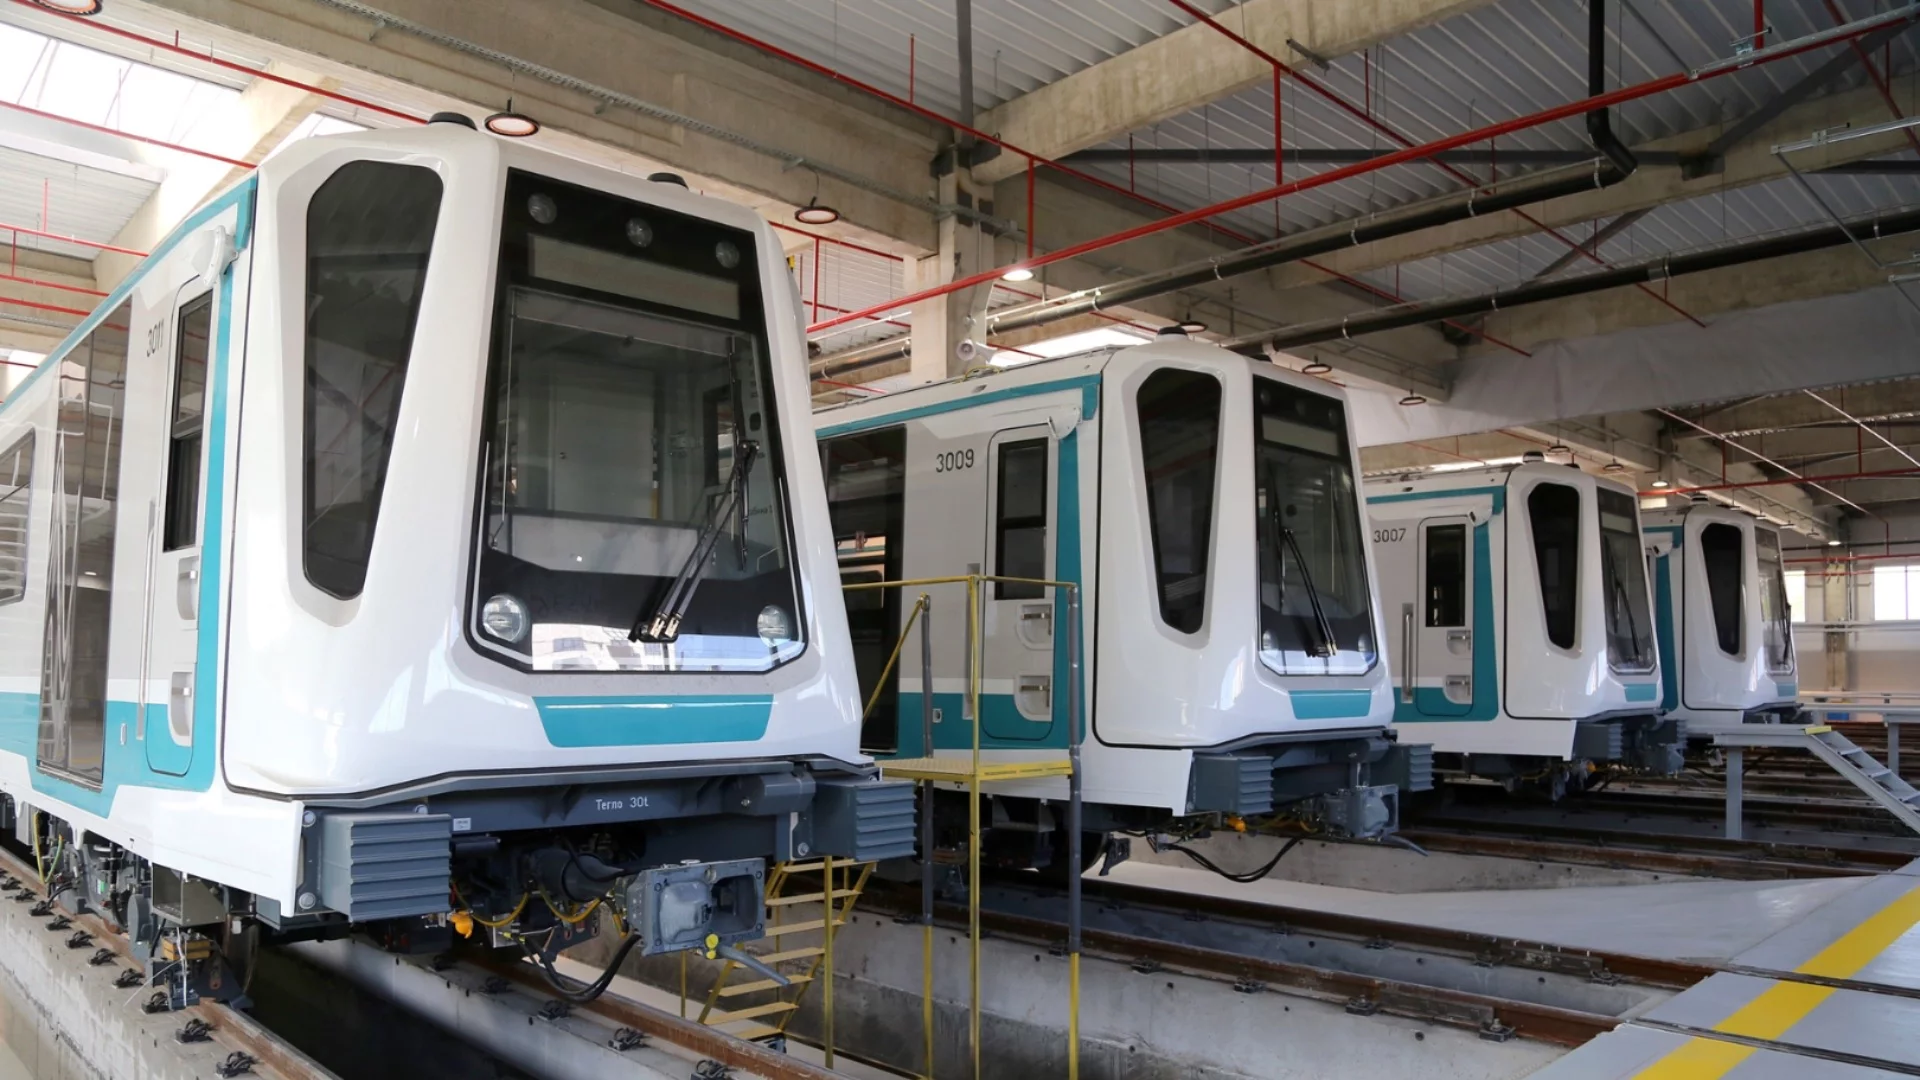 Осем влака за 140 млн. лв. купува столичното метро